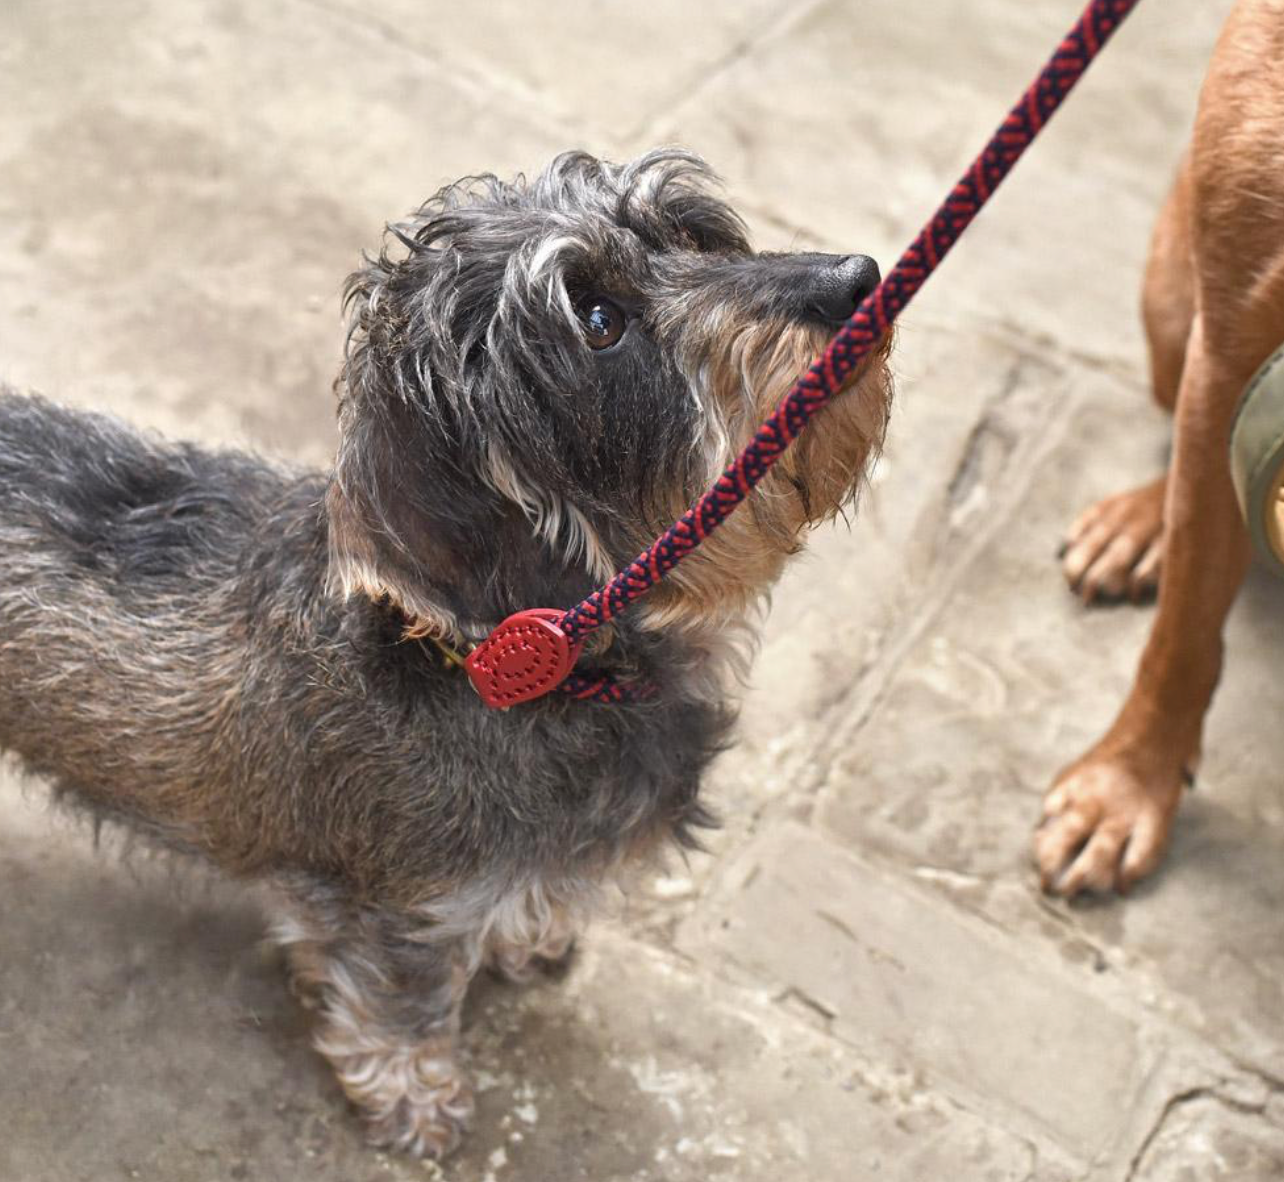 Sophie Allport Rope Dog Collar, Red